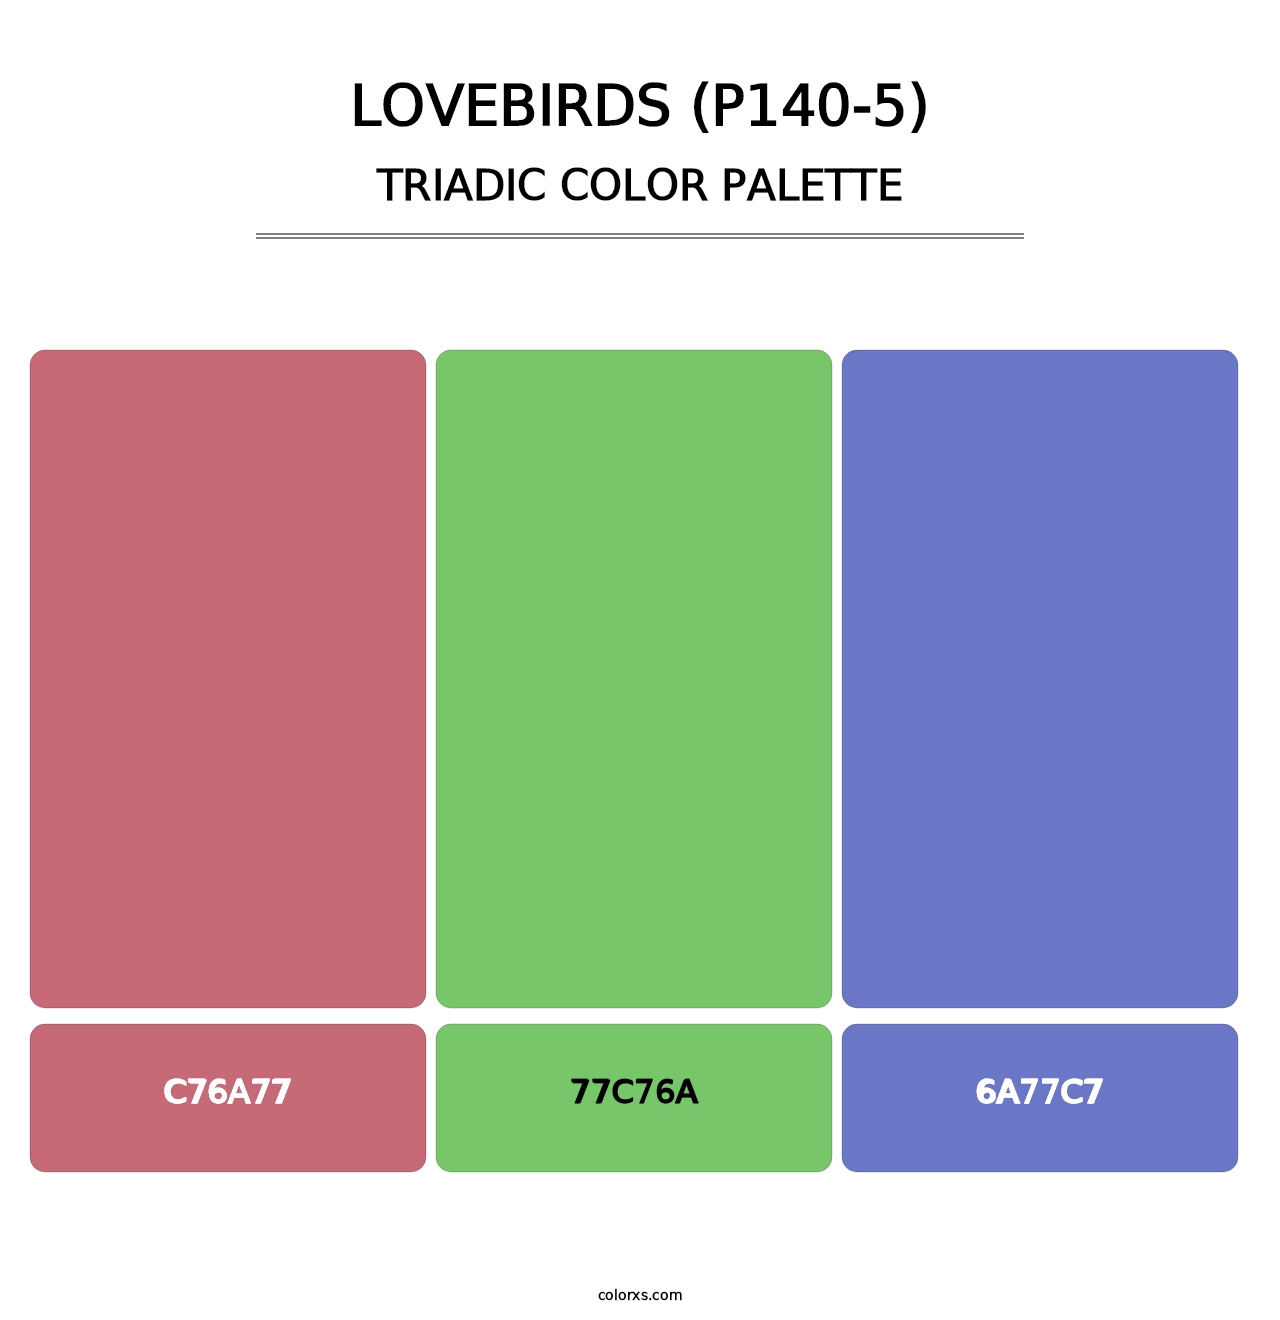 Lovebirds (P140-5) - Triadic Color Palette